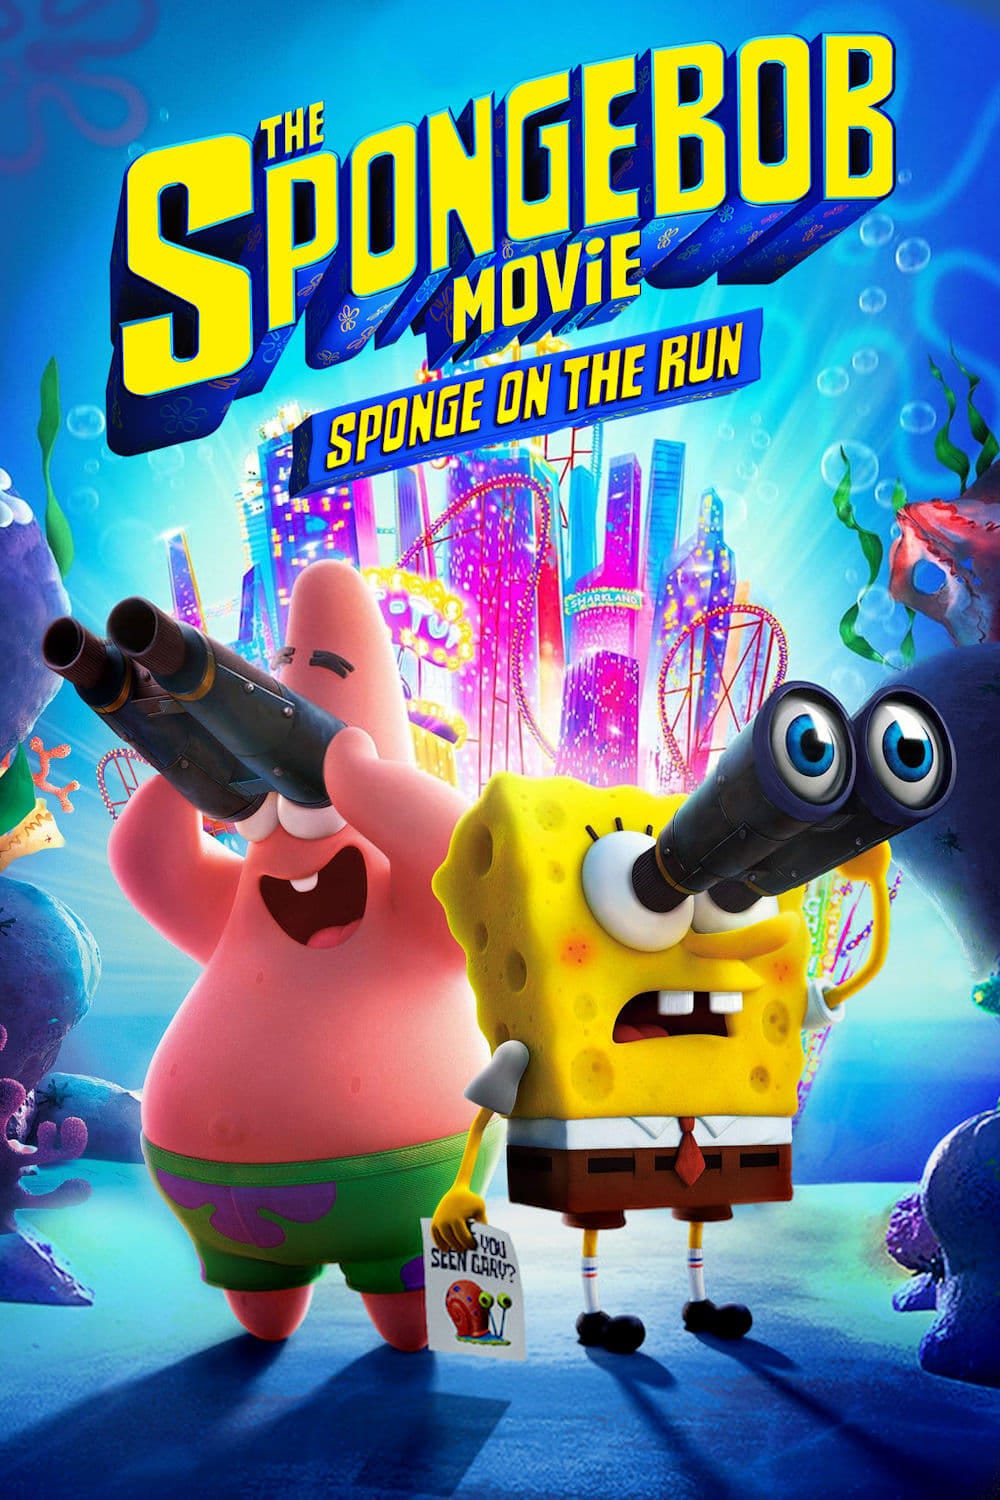 The Spongebob Movie Sponge On The Run 2020 Watch Official Site The Spongebob Sponge On The Run 2020 Hd 720p